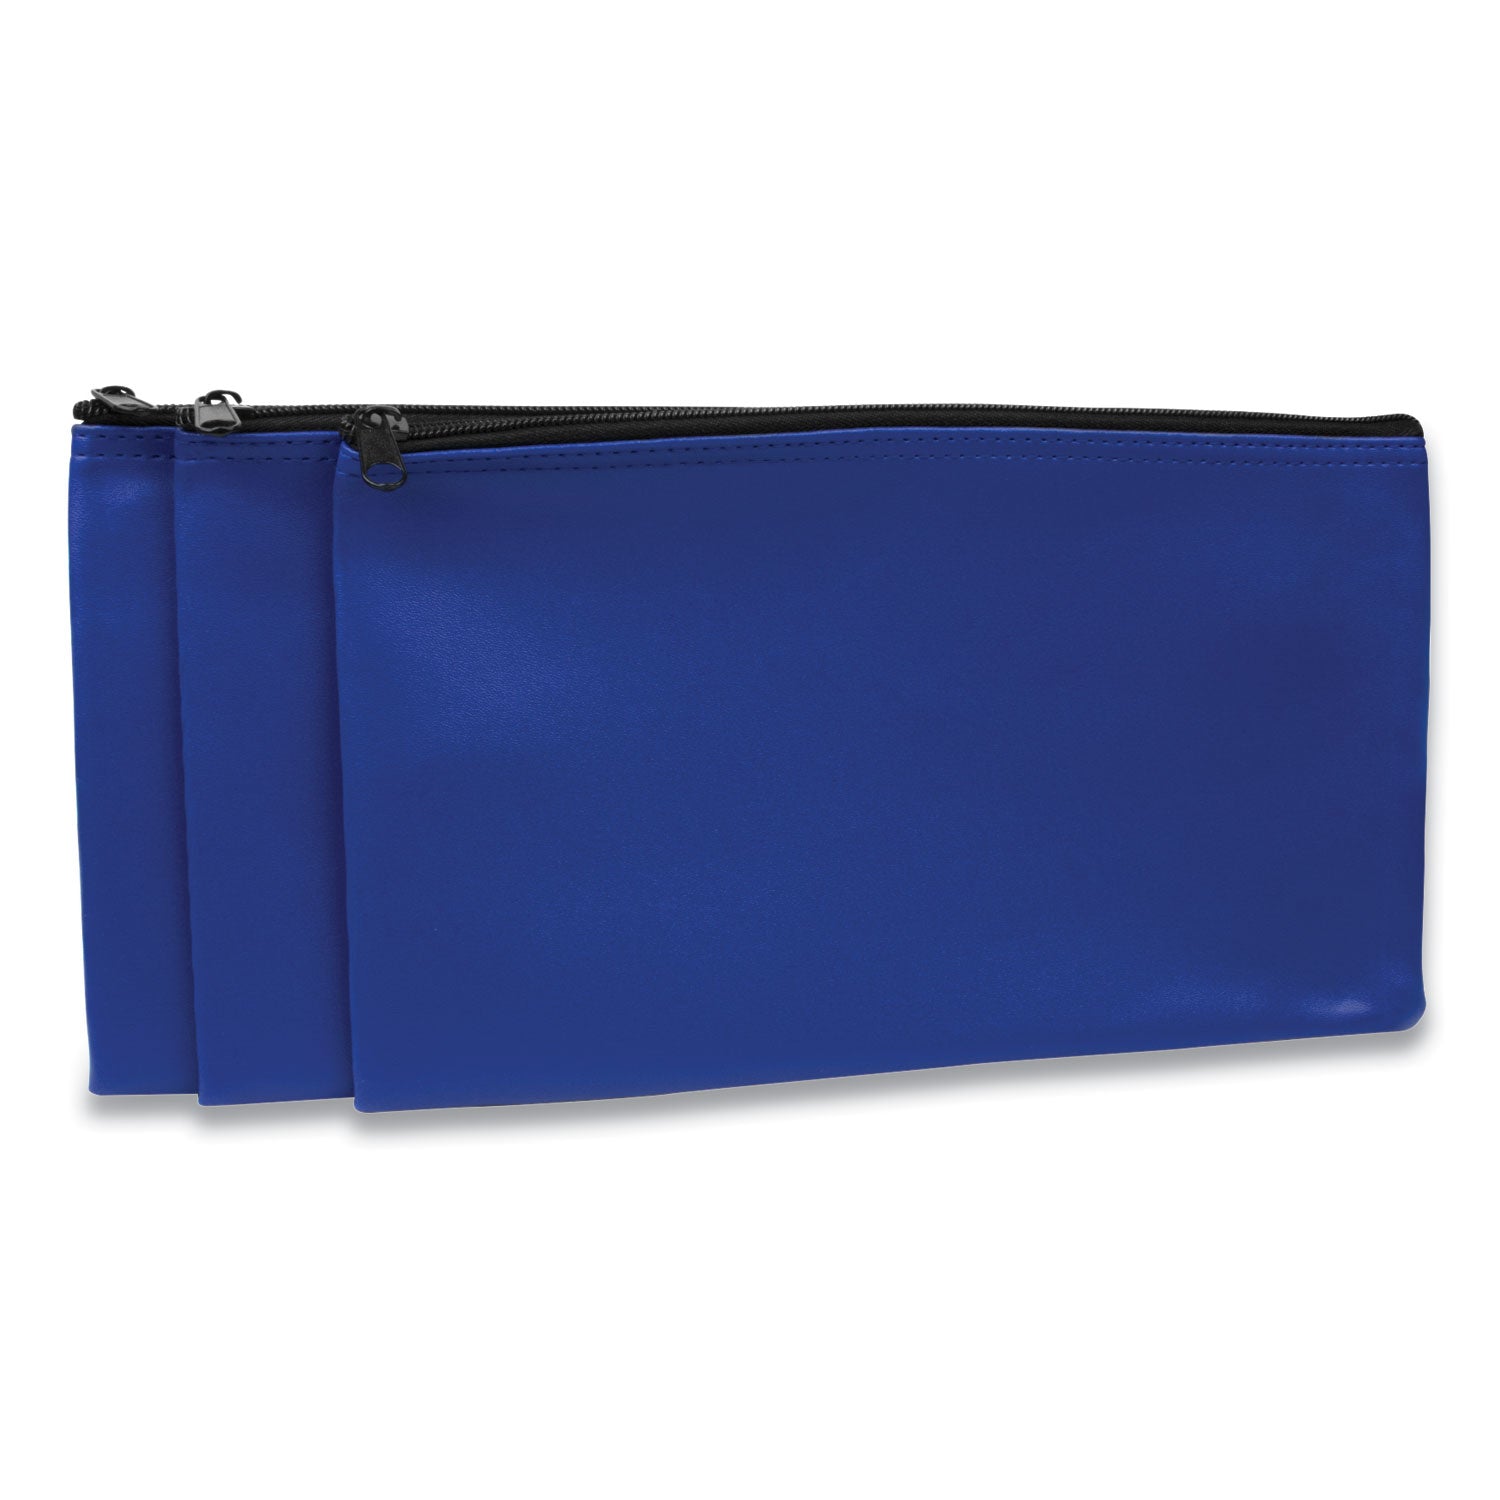 fabric-deposit-bag-vinyl-55-x-11-blue-3-pack_cnk530495 - 2